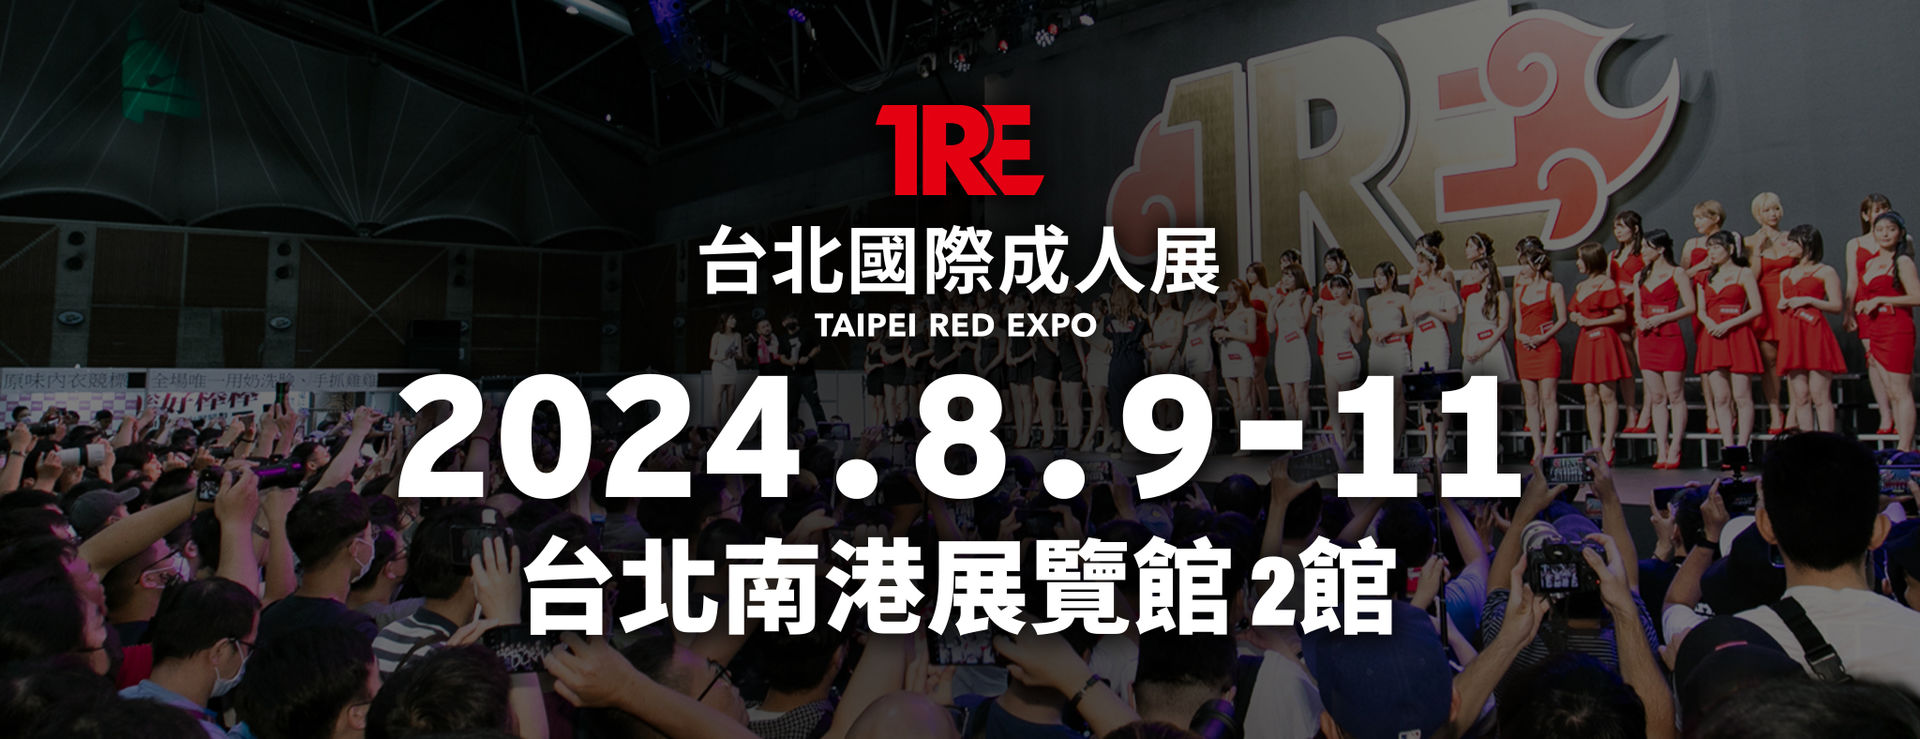 2024TRE台北國際成人展 的banner